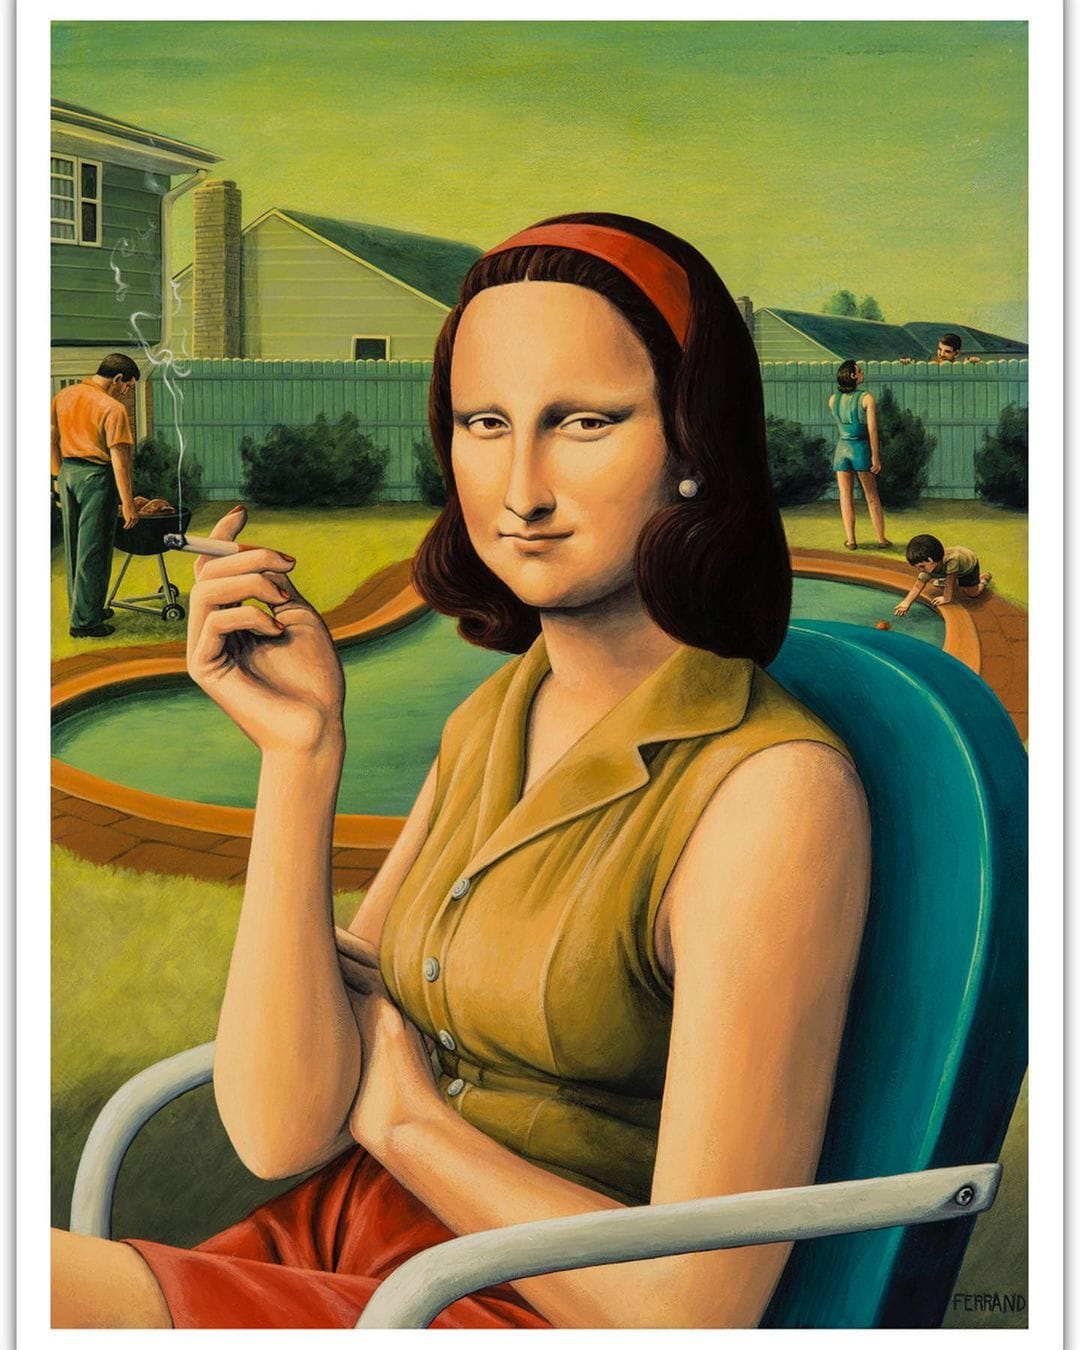 1080x1350, 181 Kb / Мона Лиза, пикник, сигарета, бассейн